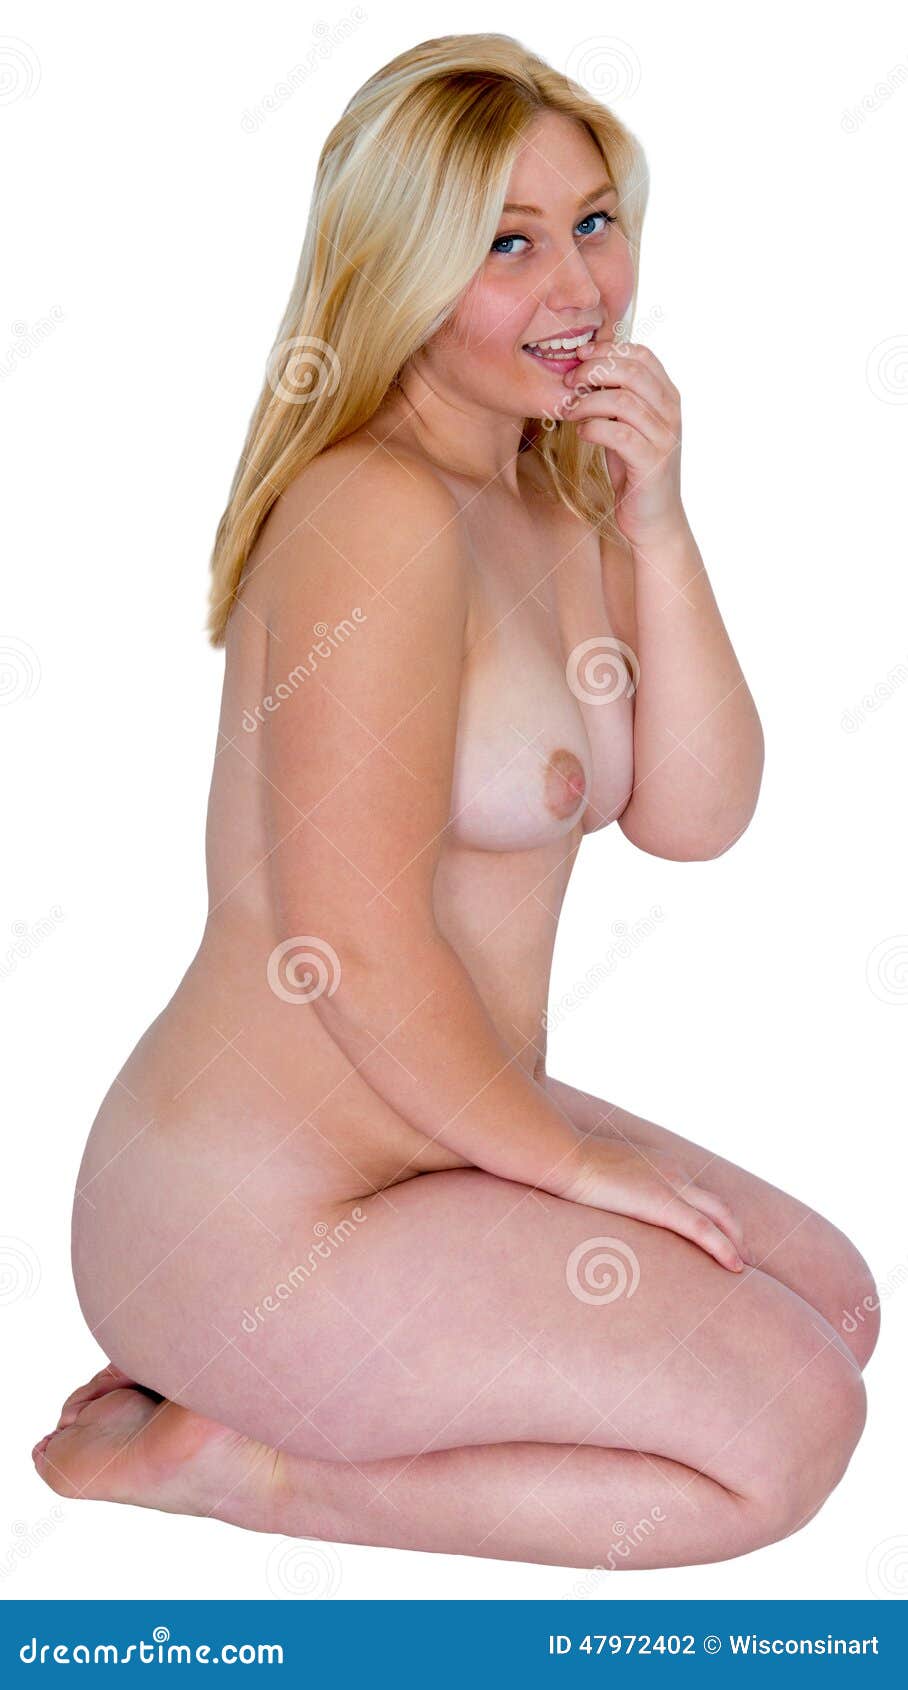 Nude pics of blonde women